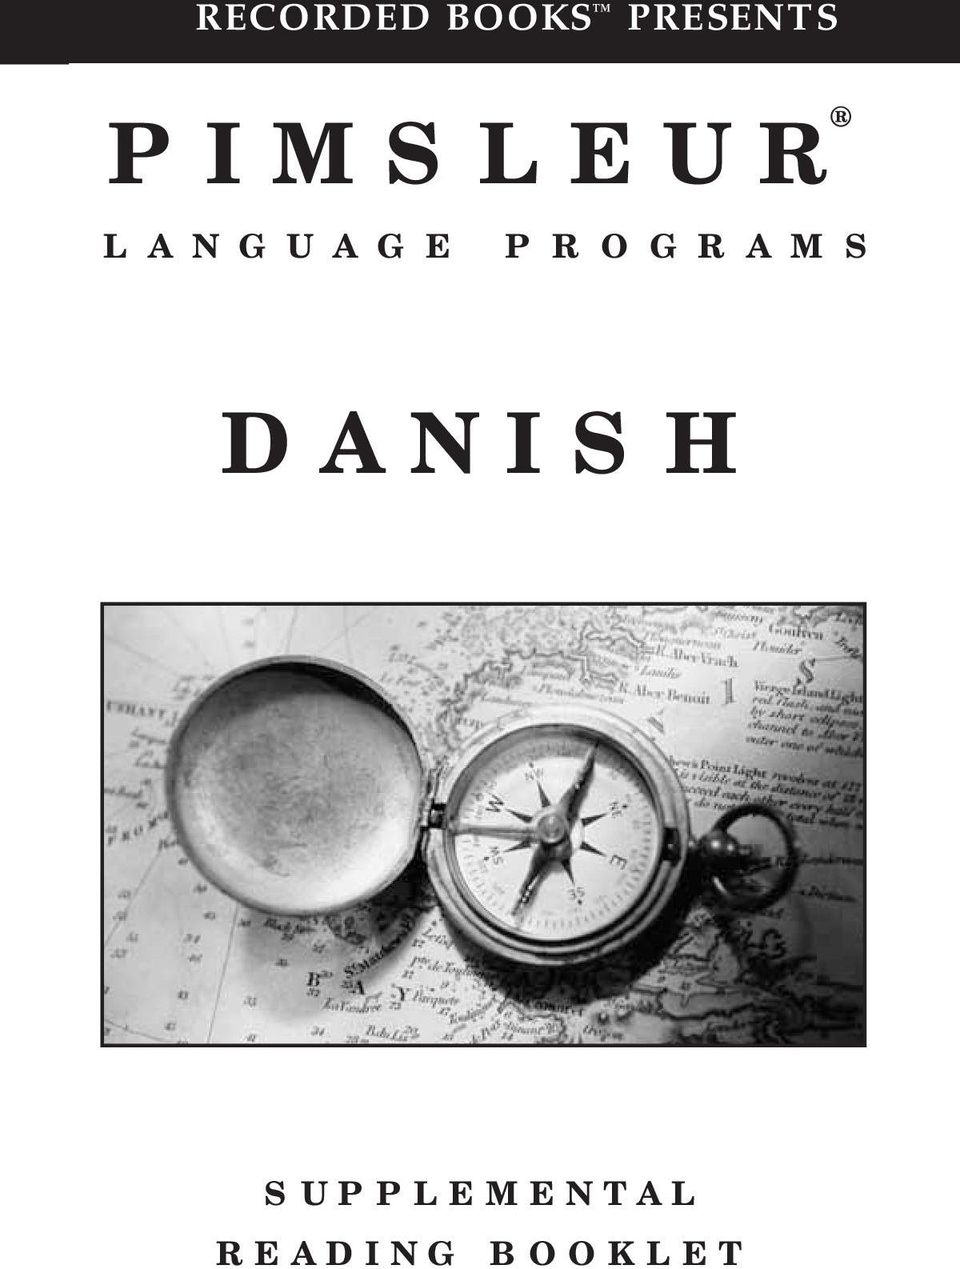 LANGUAGE PROGRAMS